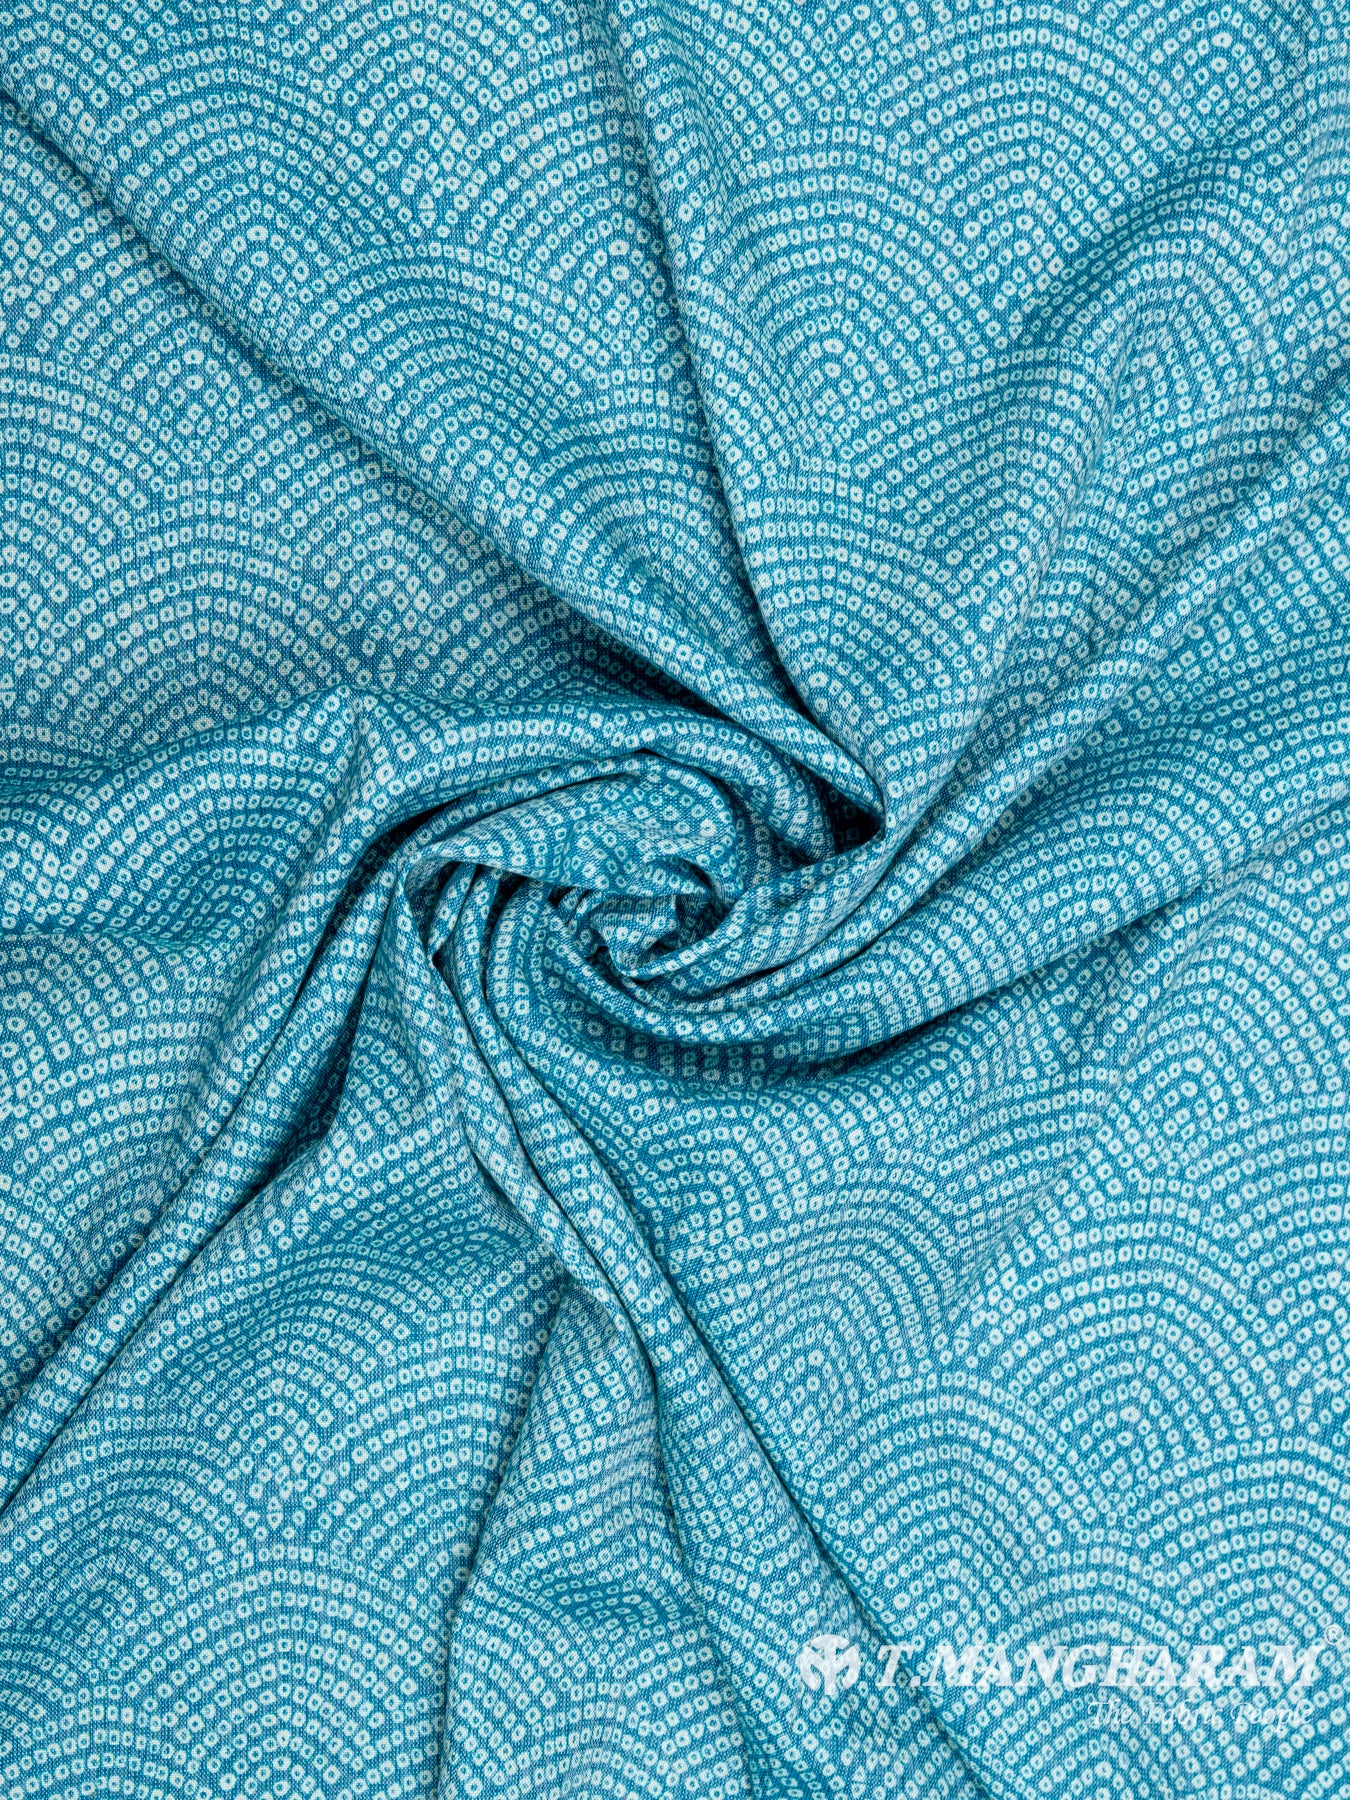 Blue Rayon Cotton Fabric - EC5355 view-1